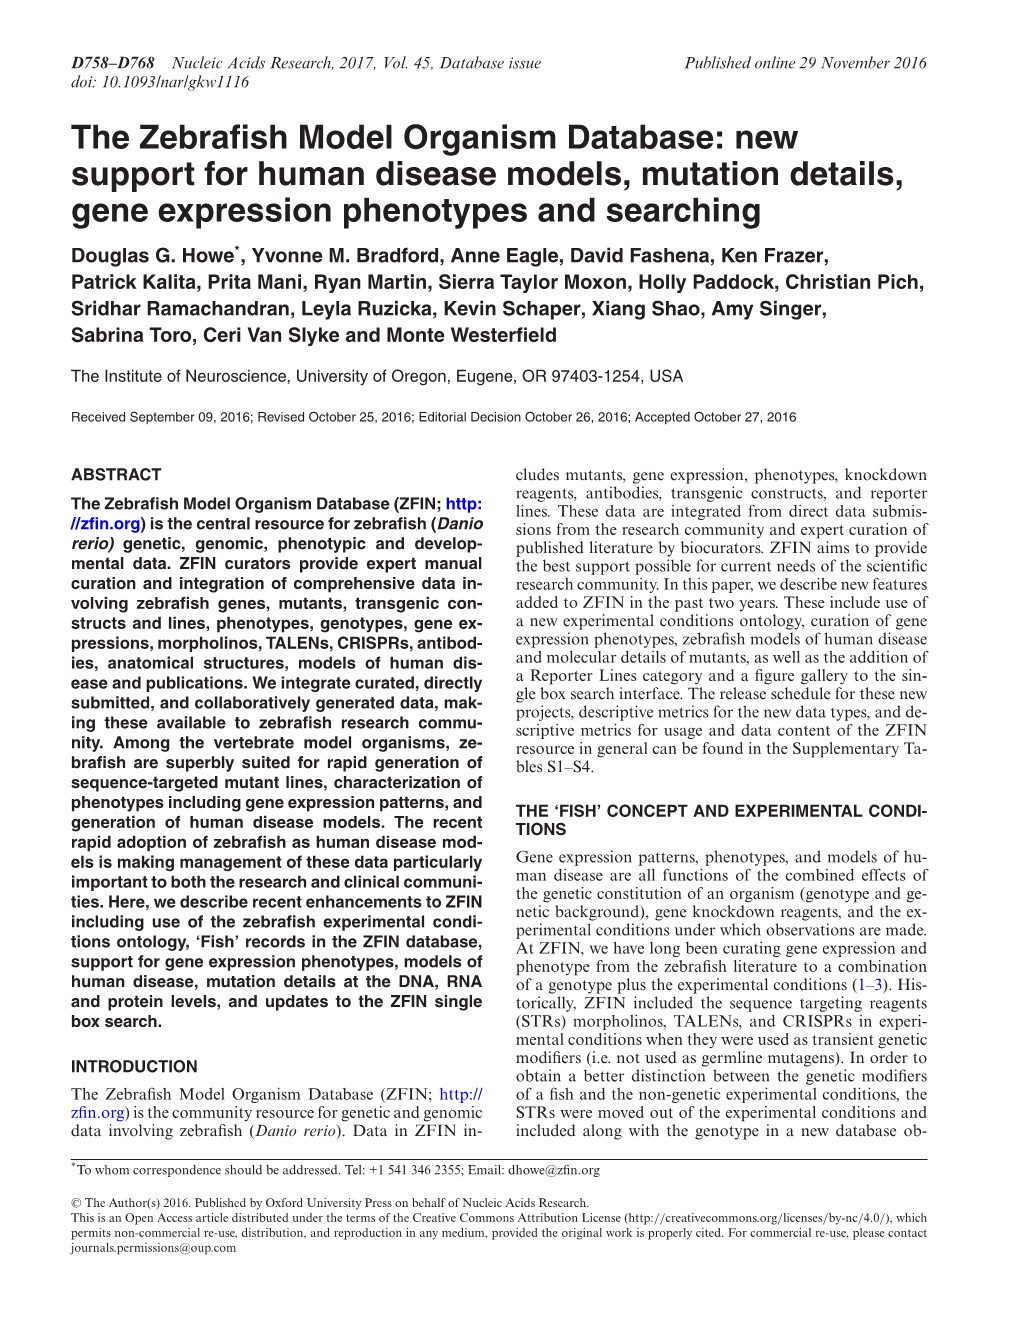 The Zebrafish Model Organism Database: New Support for Human